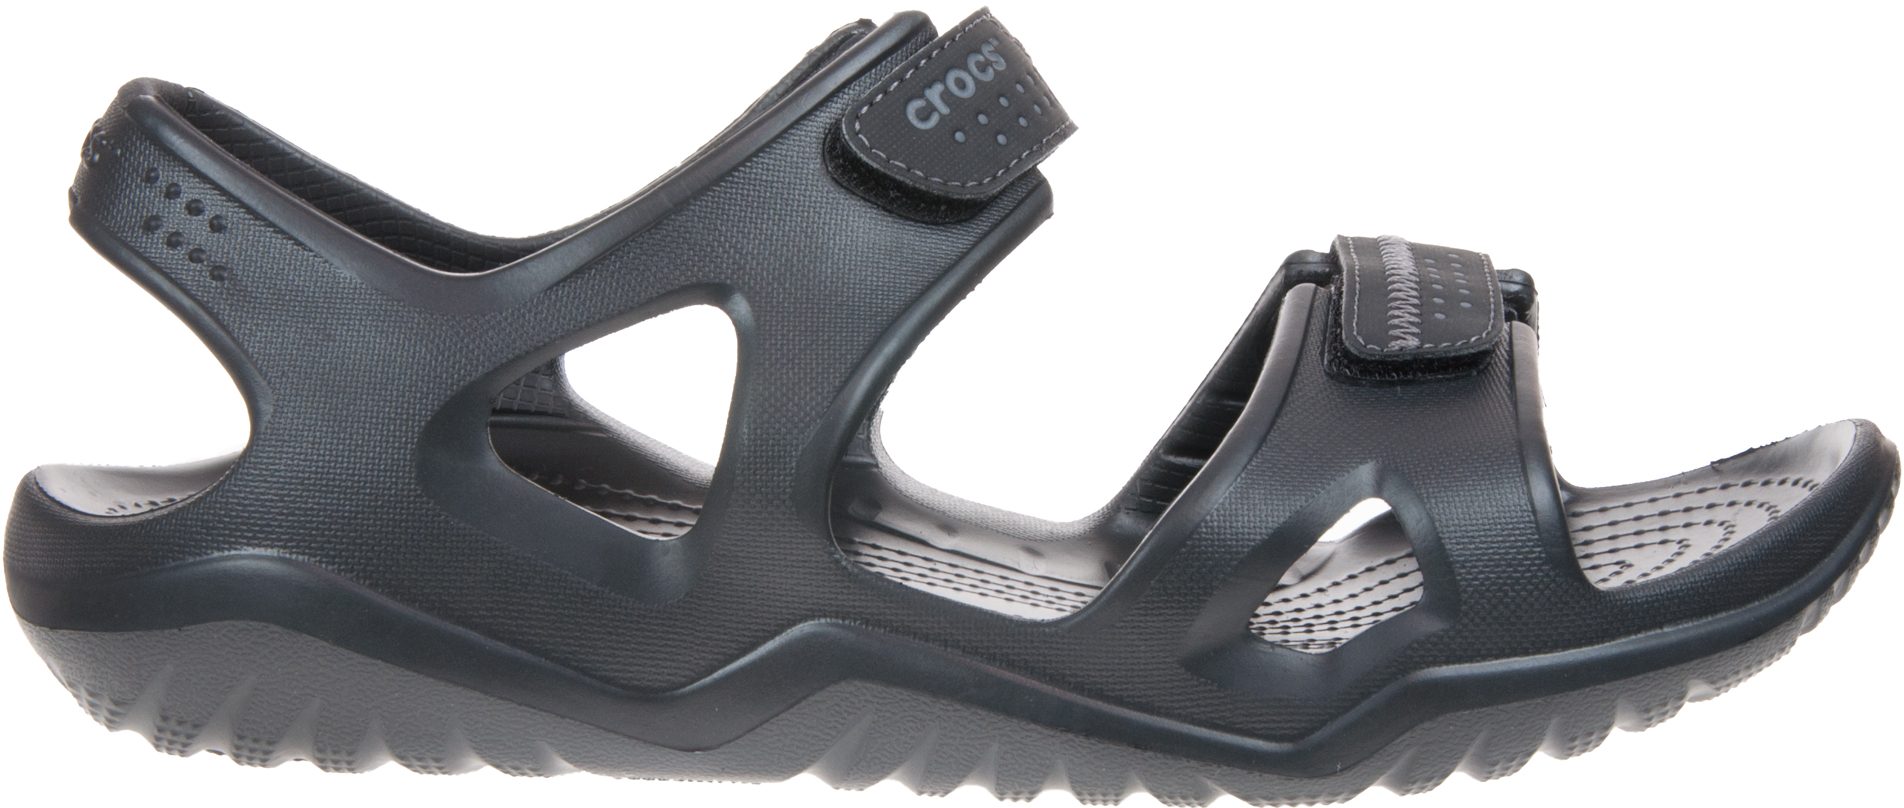 Crocs Mens Swiftwater River Sandal Black 203965-060 - Full Sandals ...